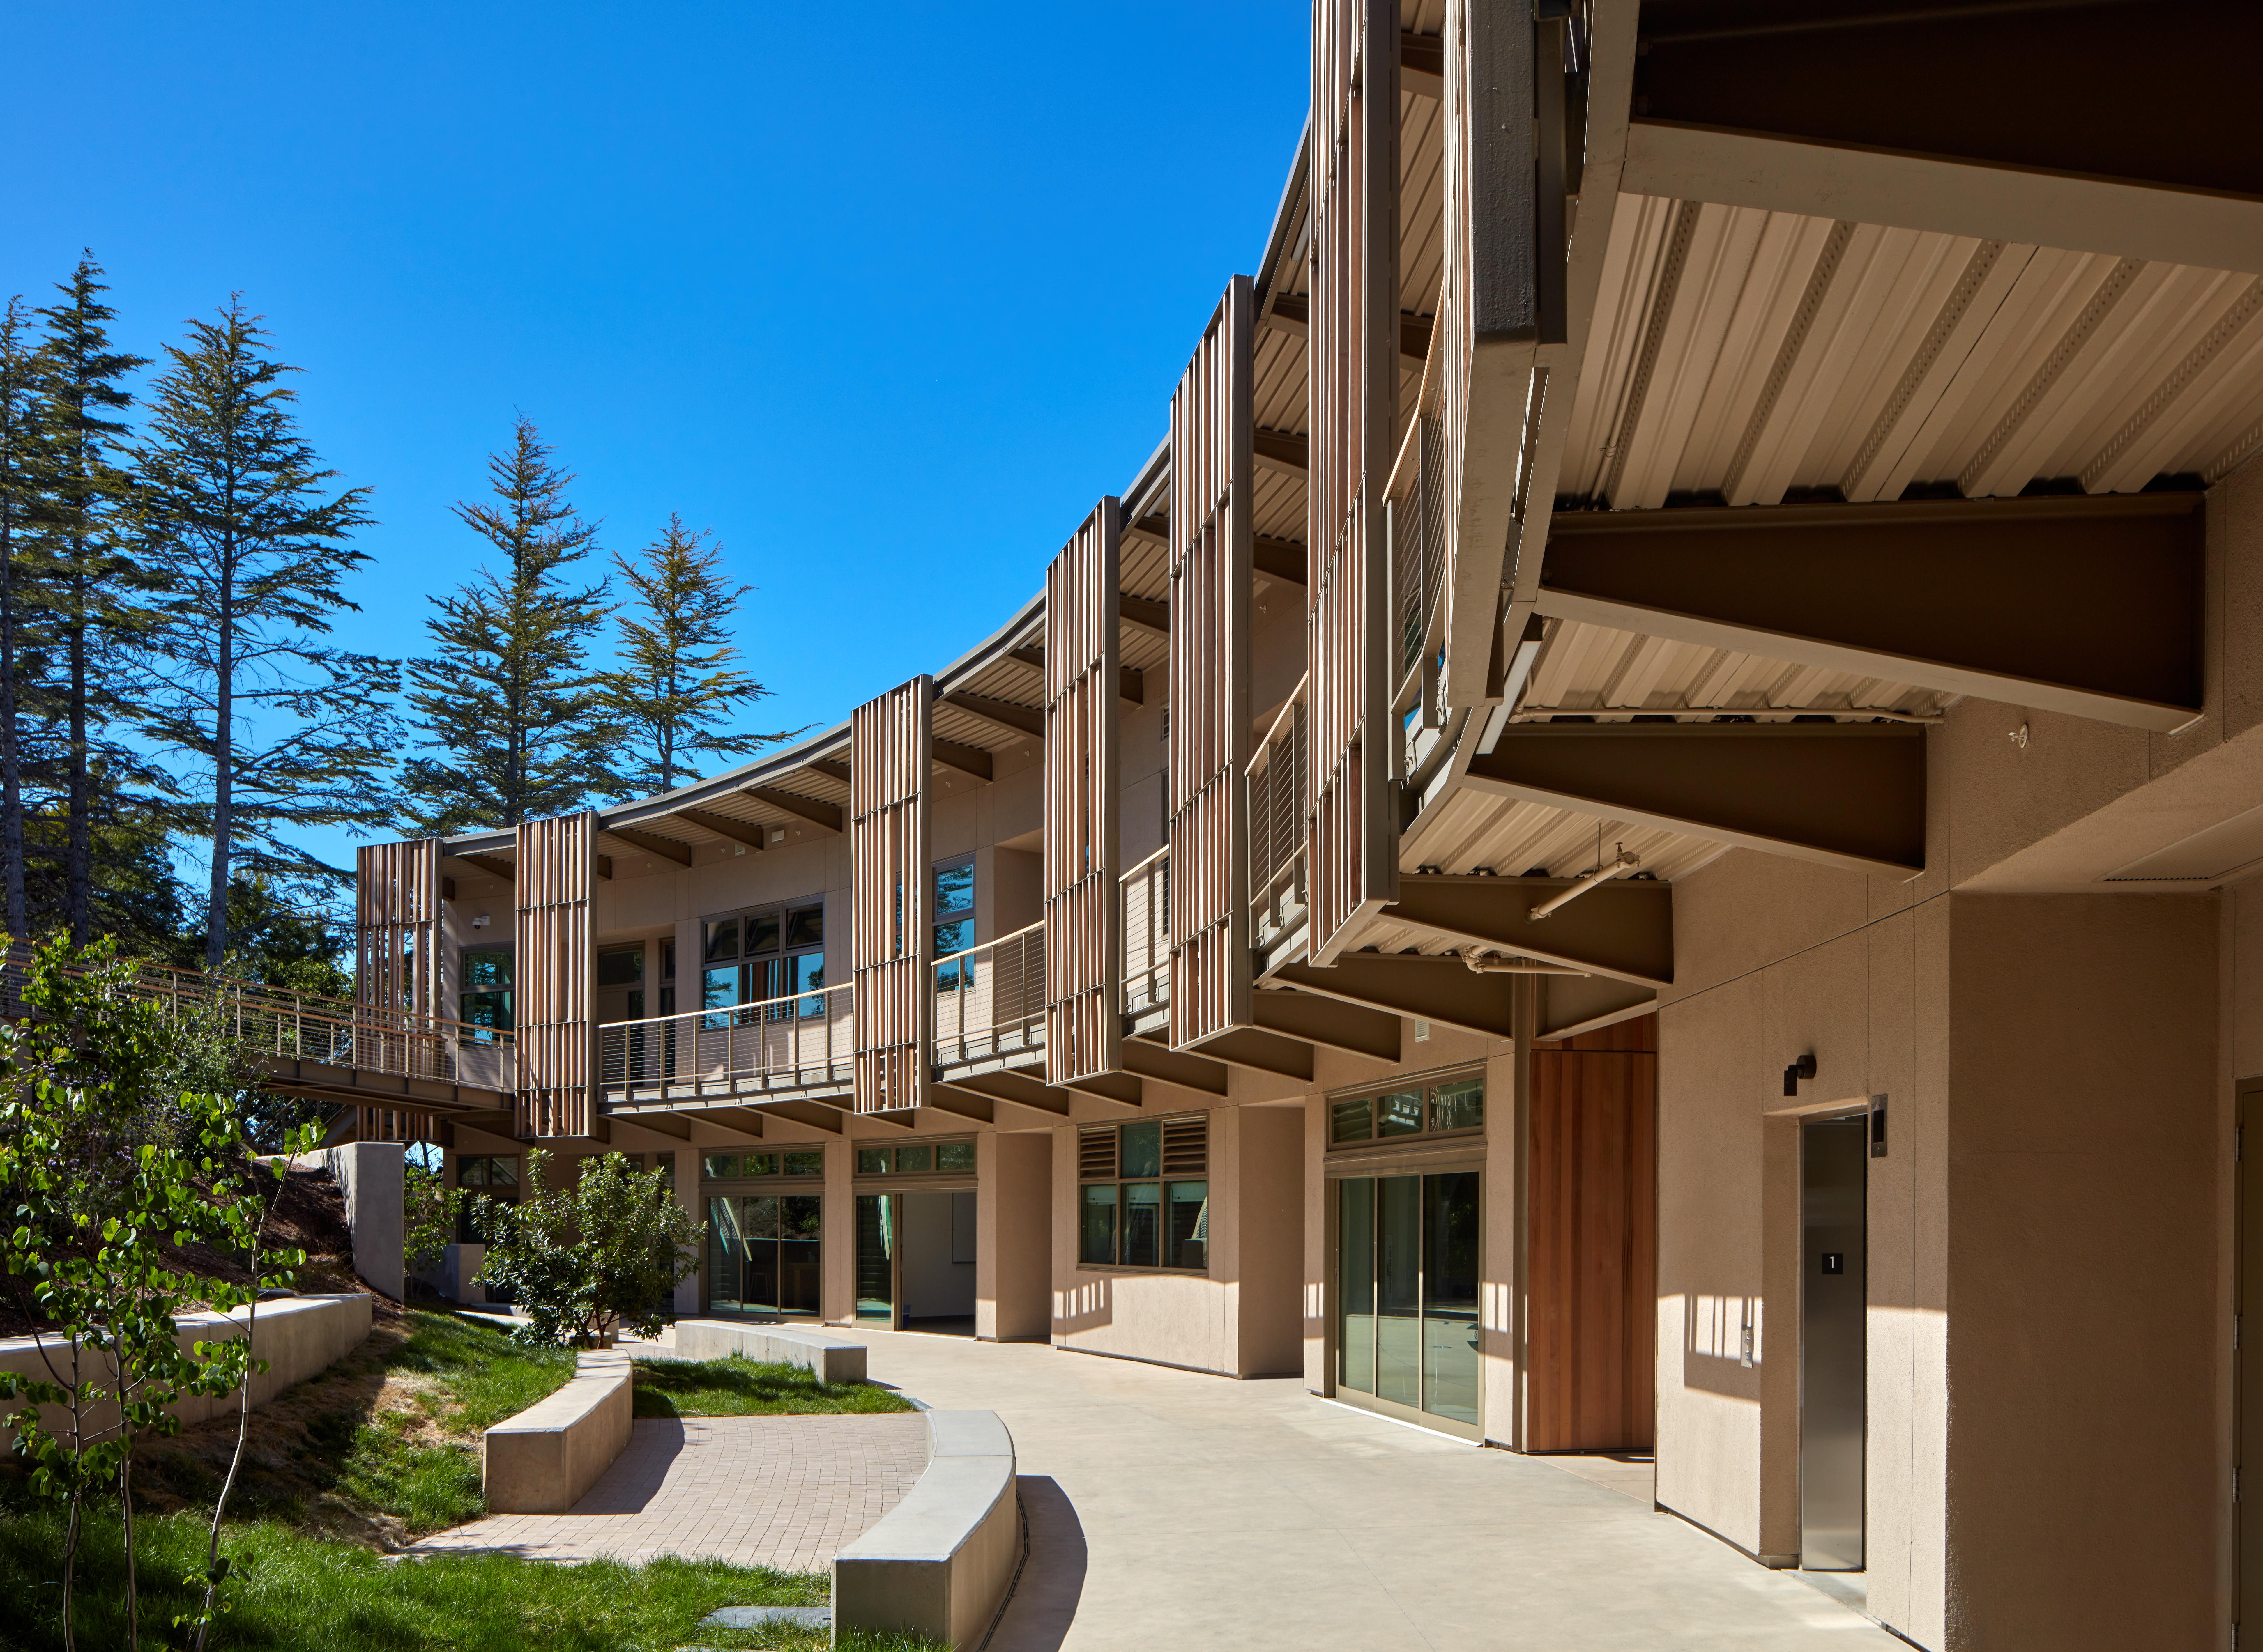 California Green Ribbon Award - School Facility Design (CA Dept of  Education)